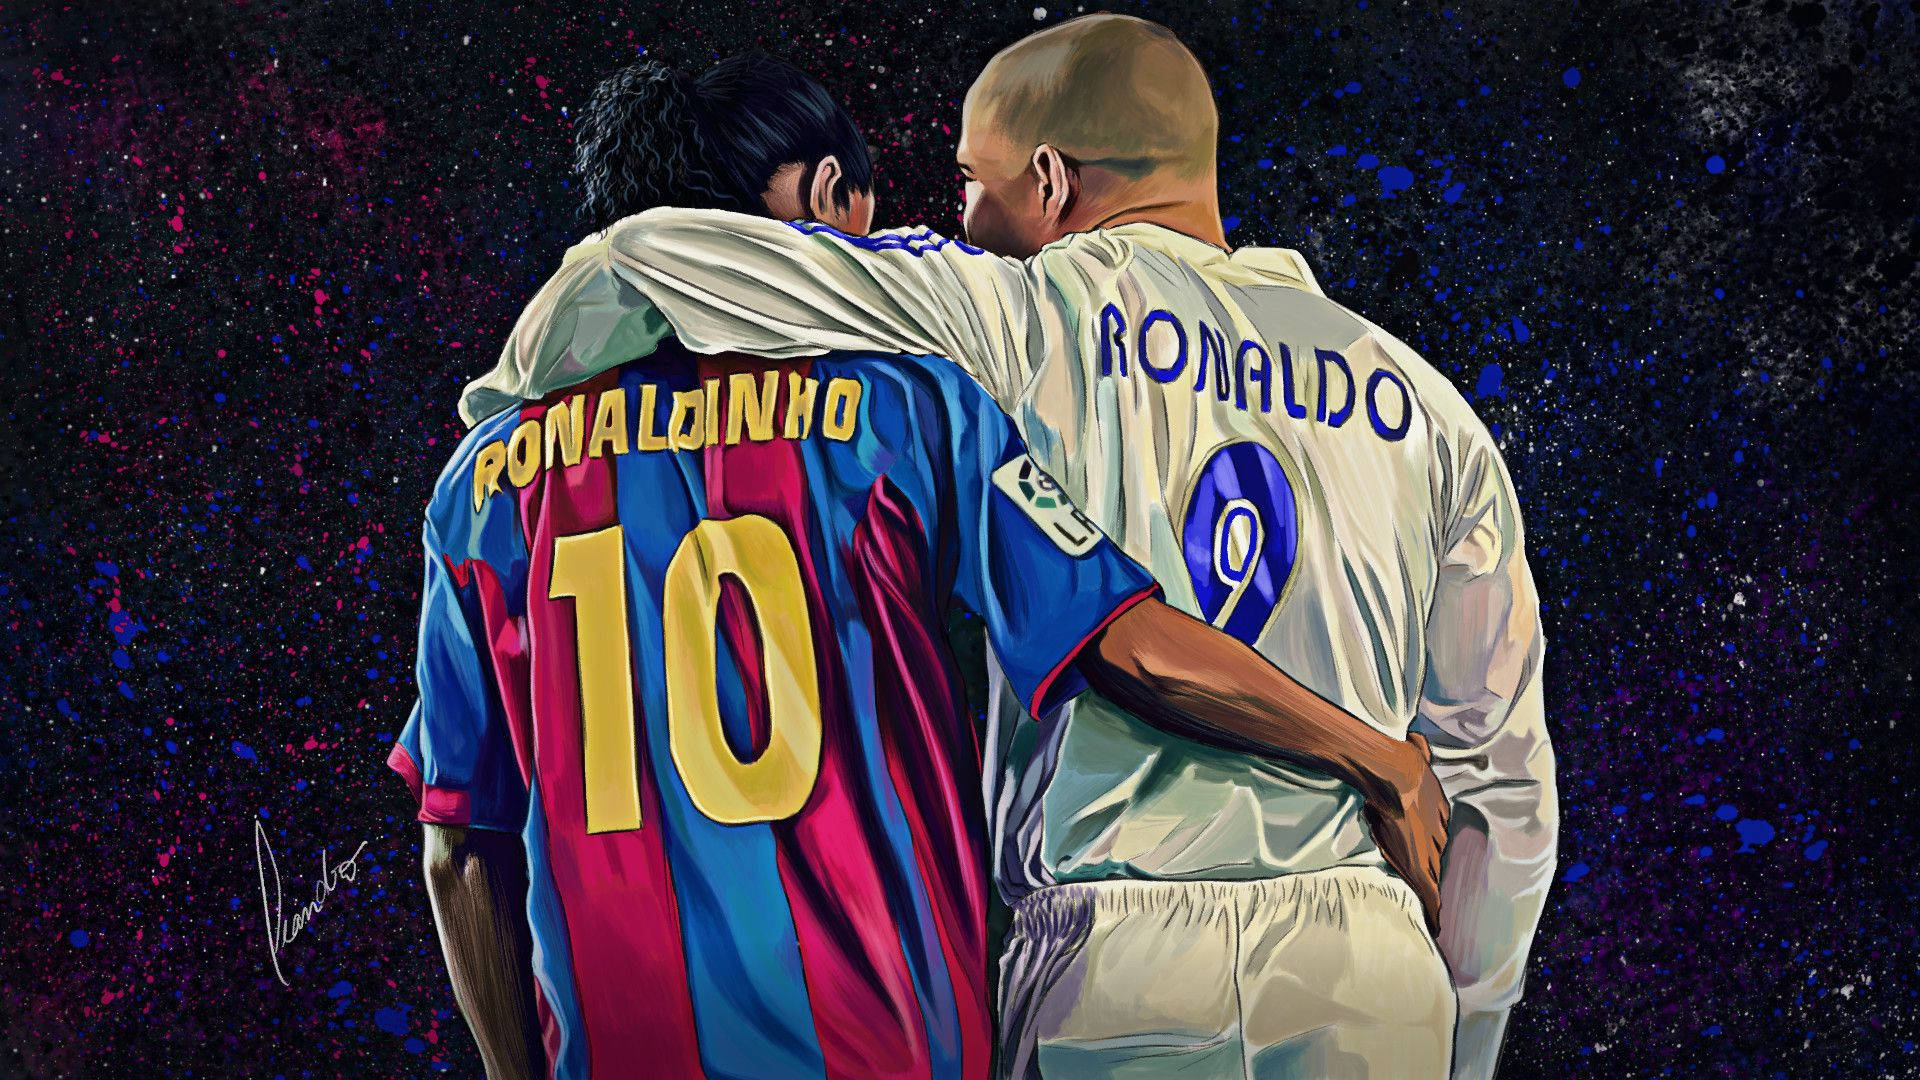 Ronaldo And Ronaldinho Background